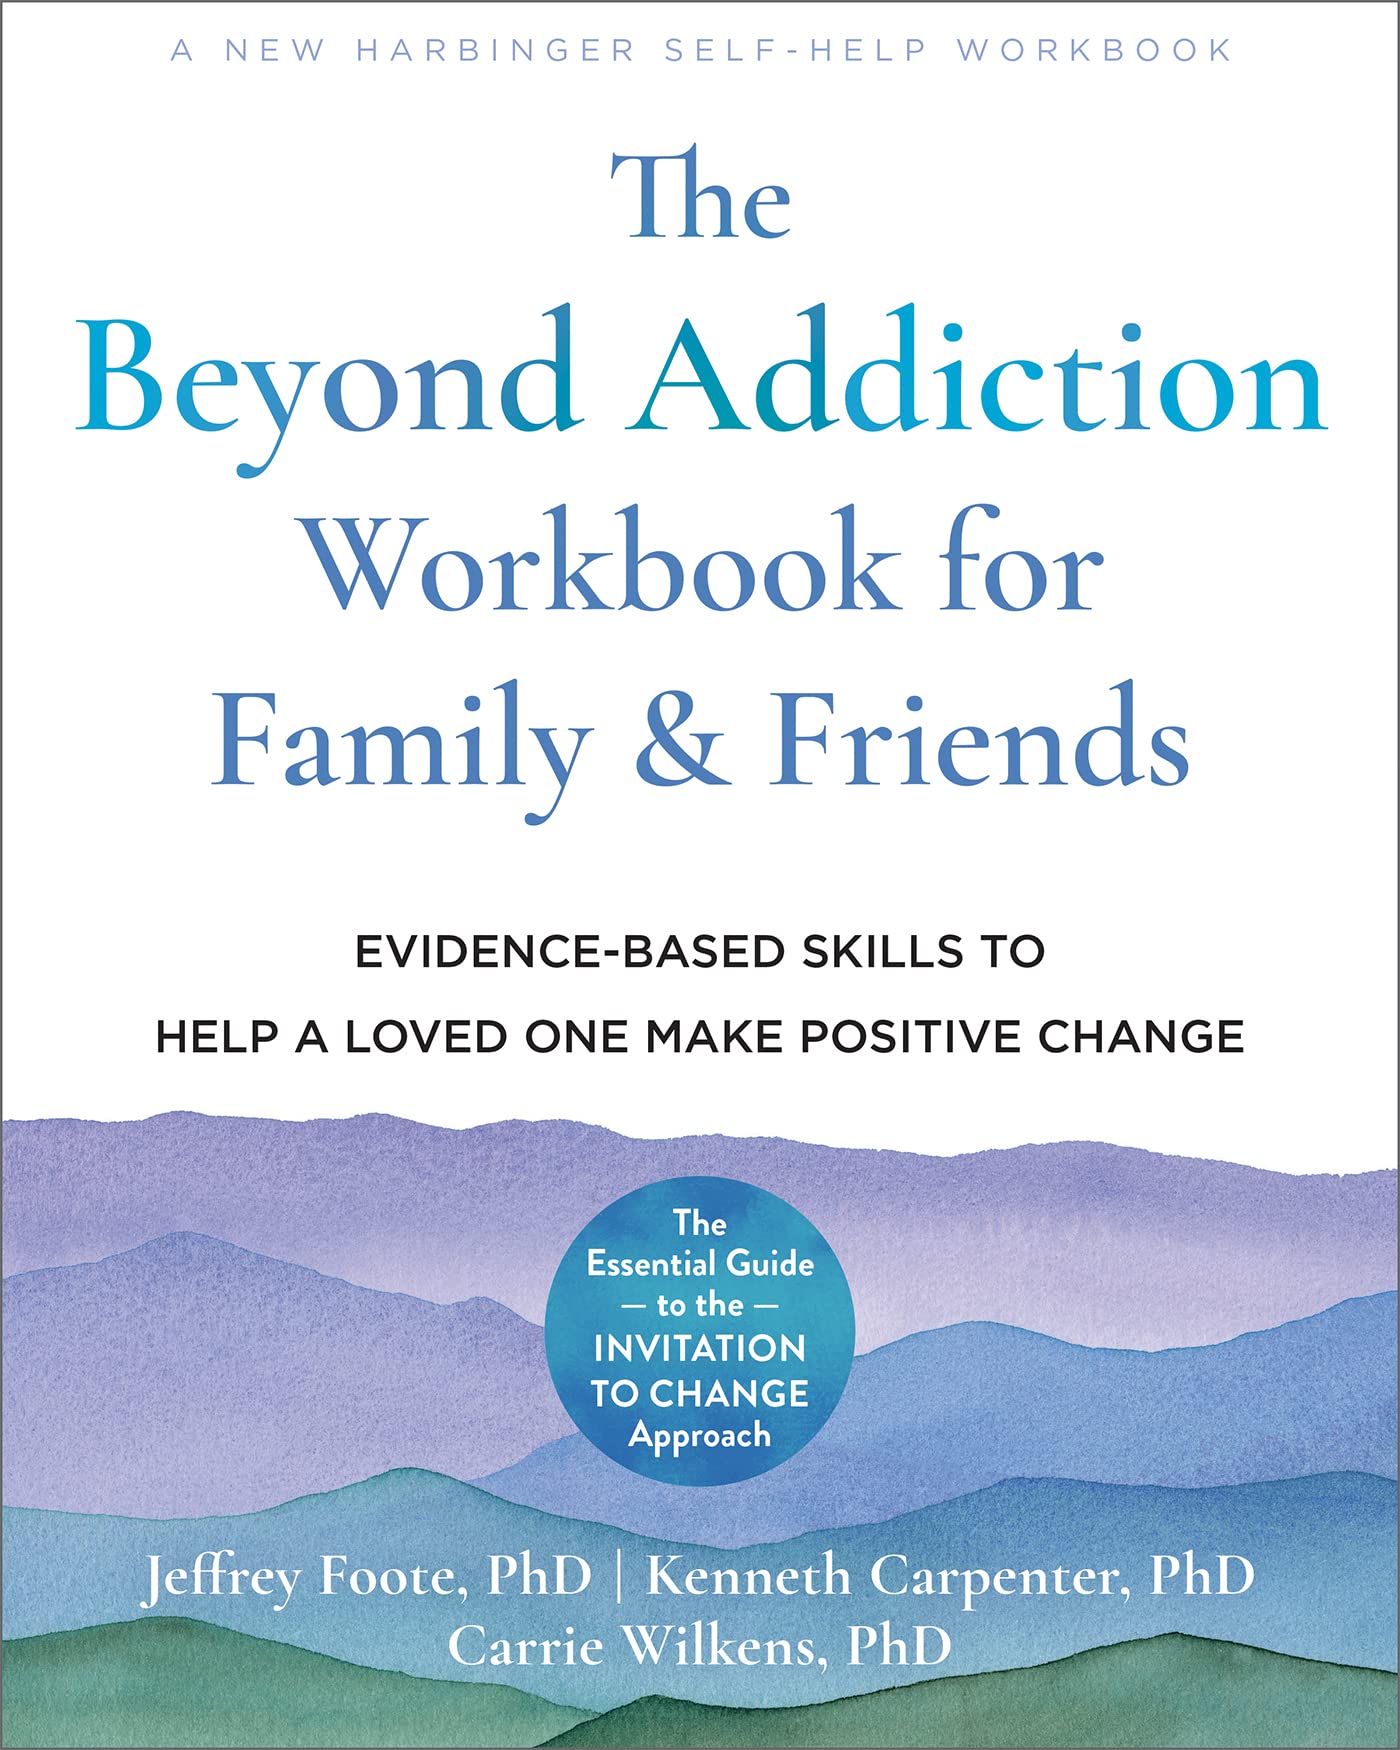 Beyond Addiction Workbook cover